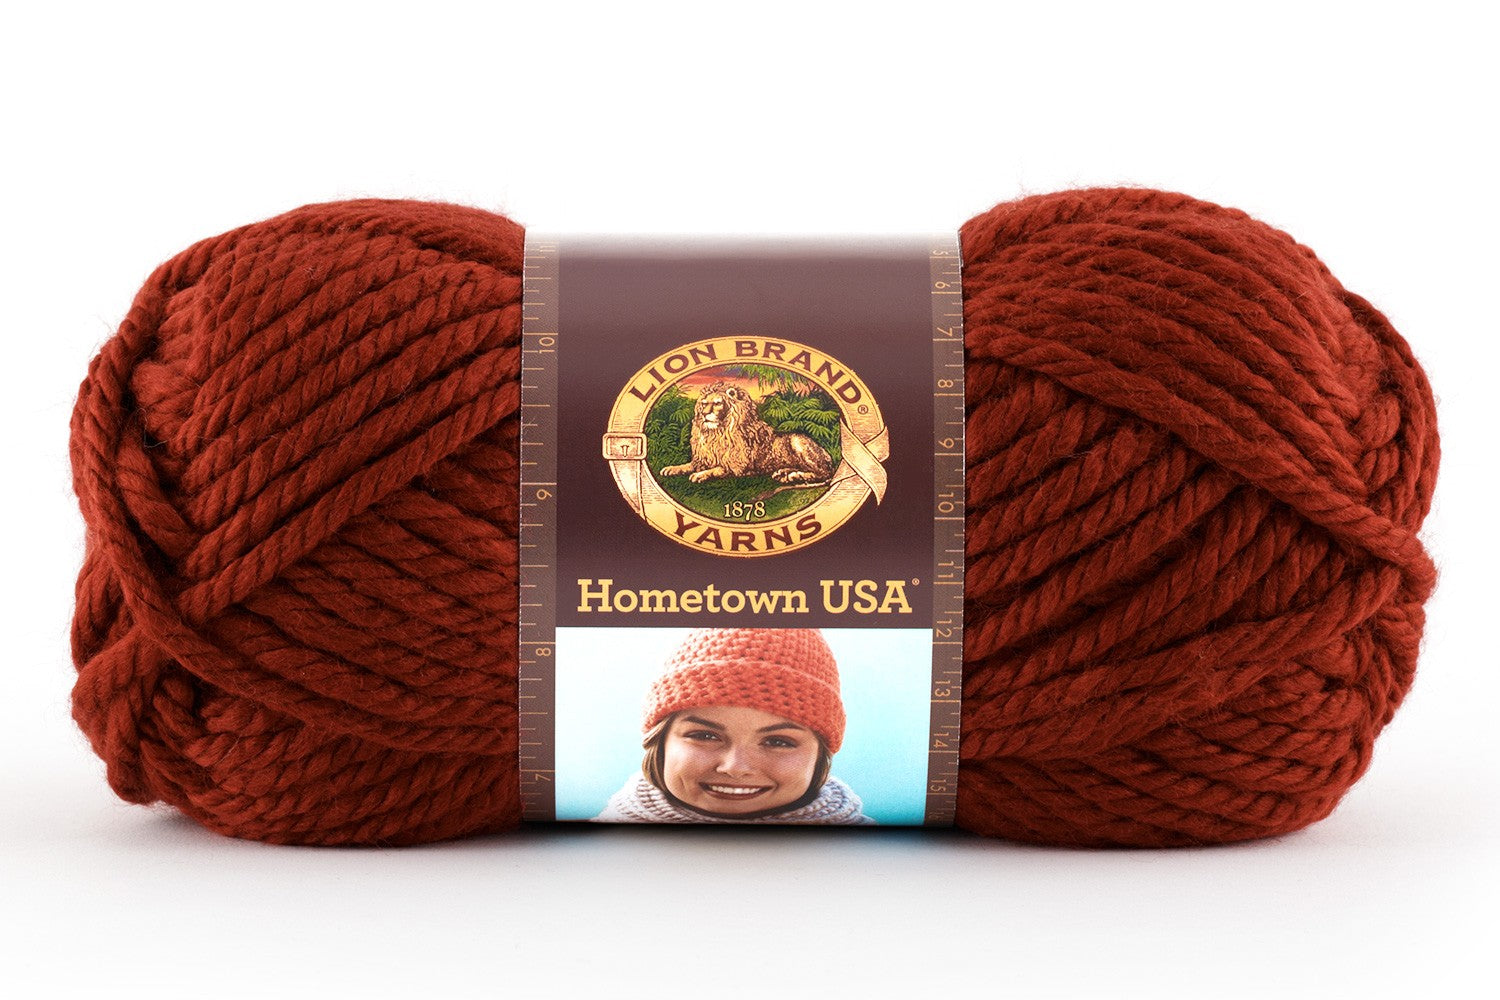 Lion Brand Baby Soft Yarn - Pastel Print 140g – CraftOnline